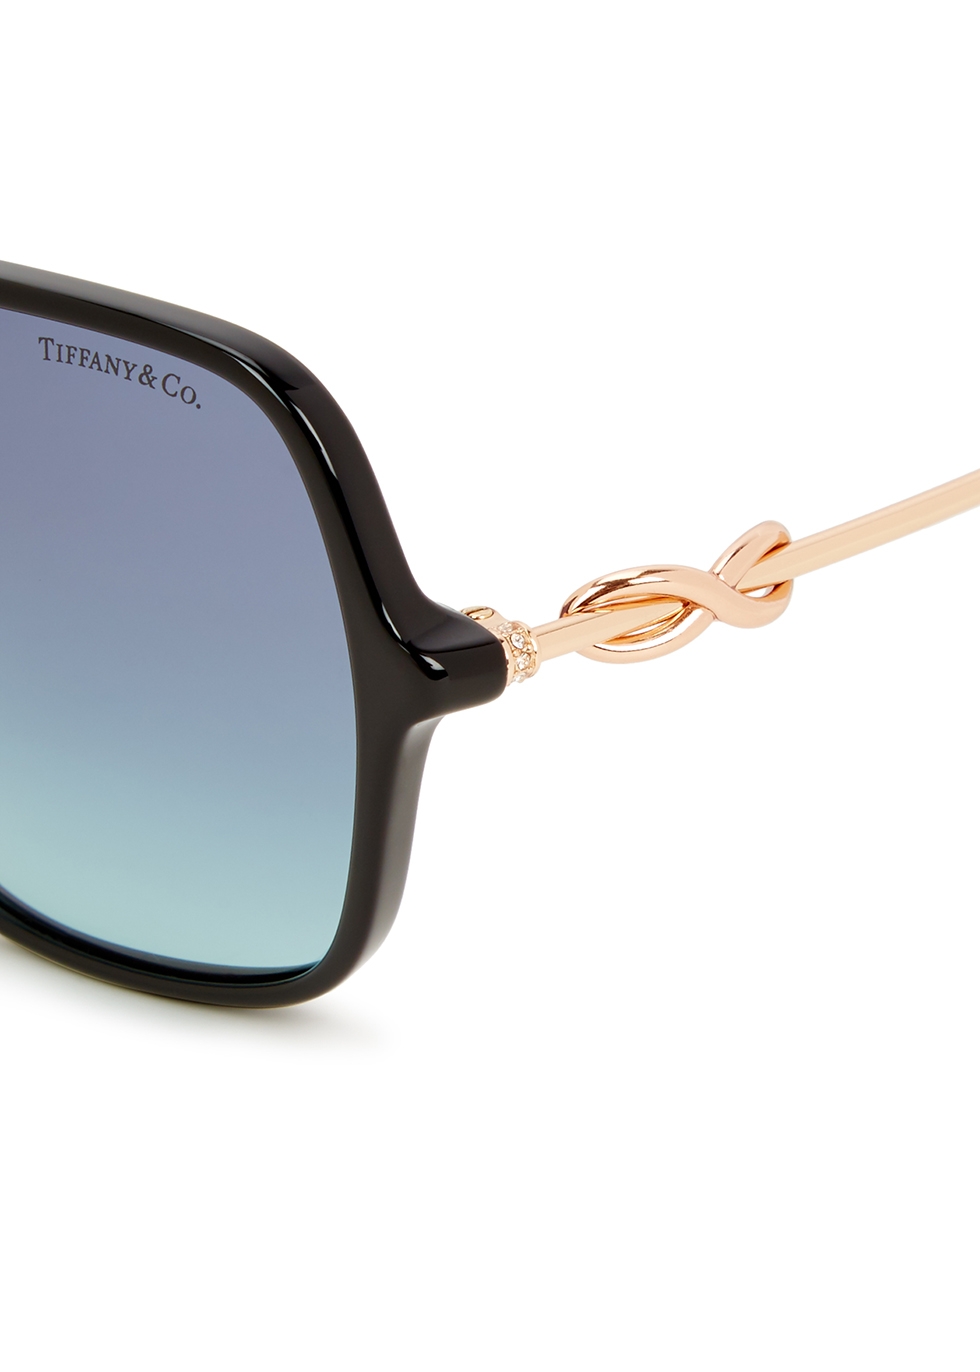 tiffany style sunglasses